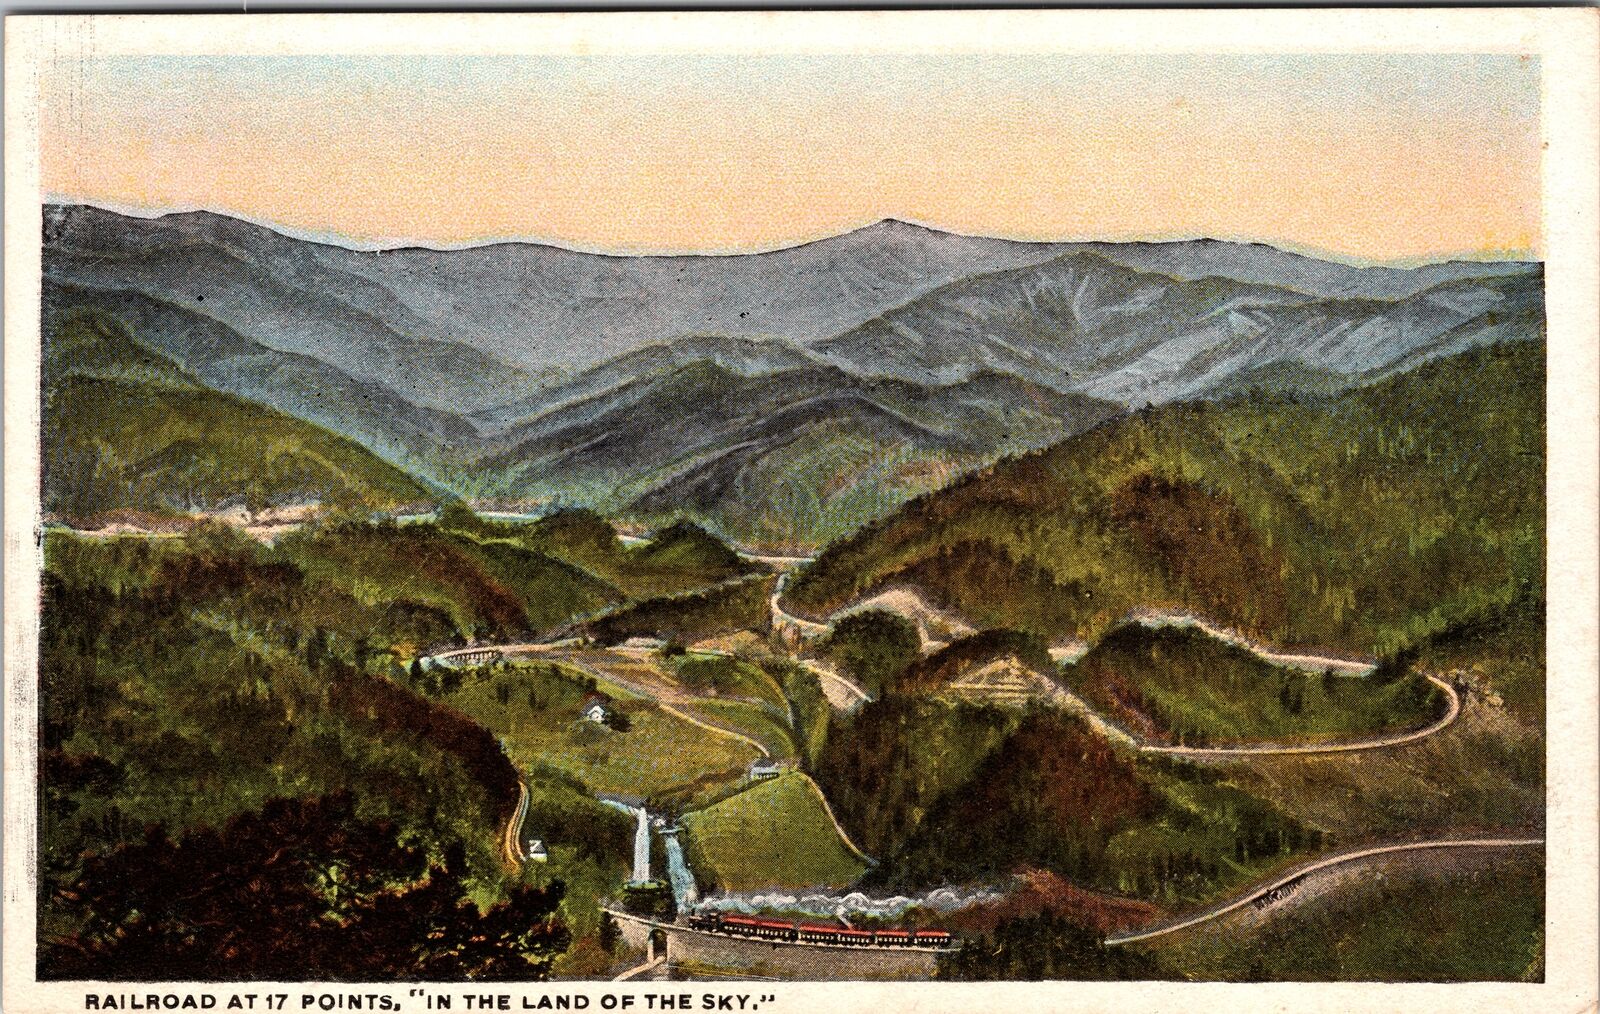 Road At 17 Points NC-North Carolina, Scenic View Vintage Souvenir Postcard